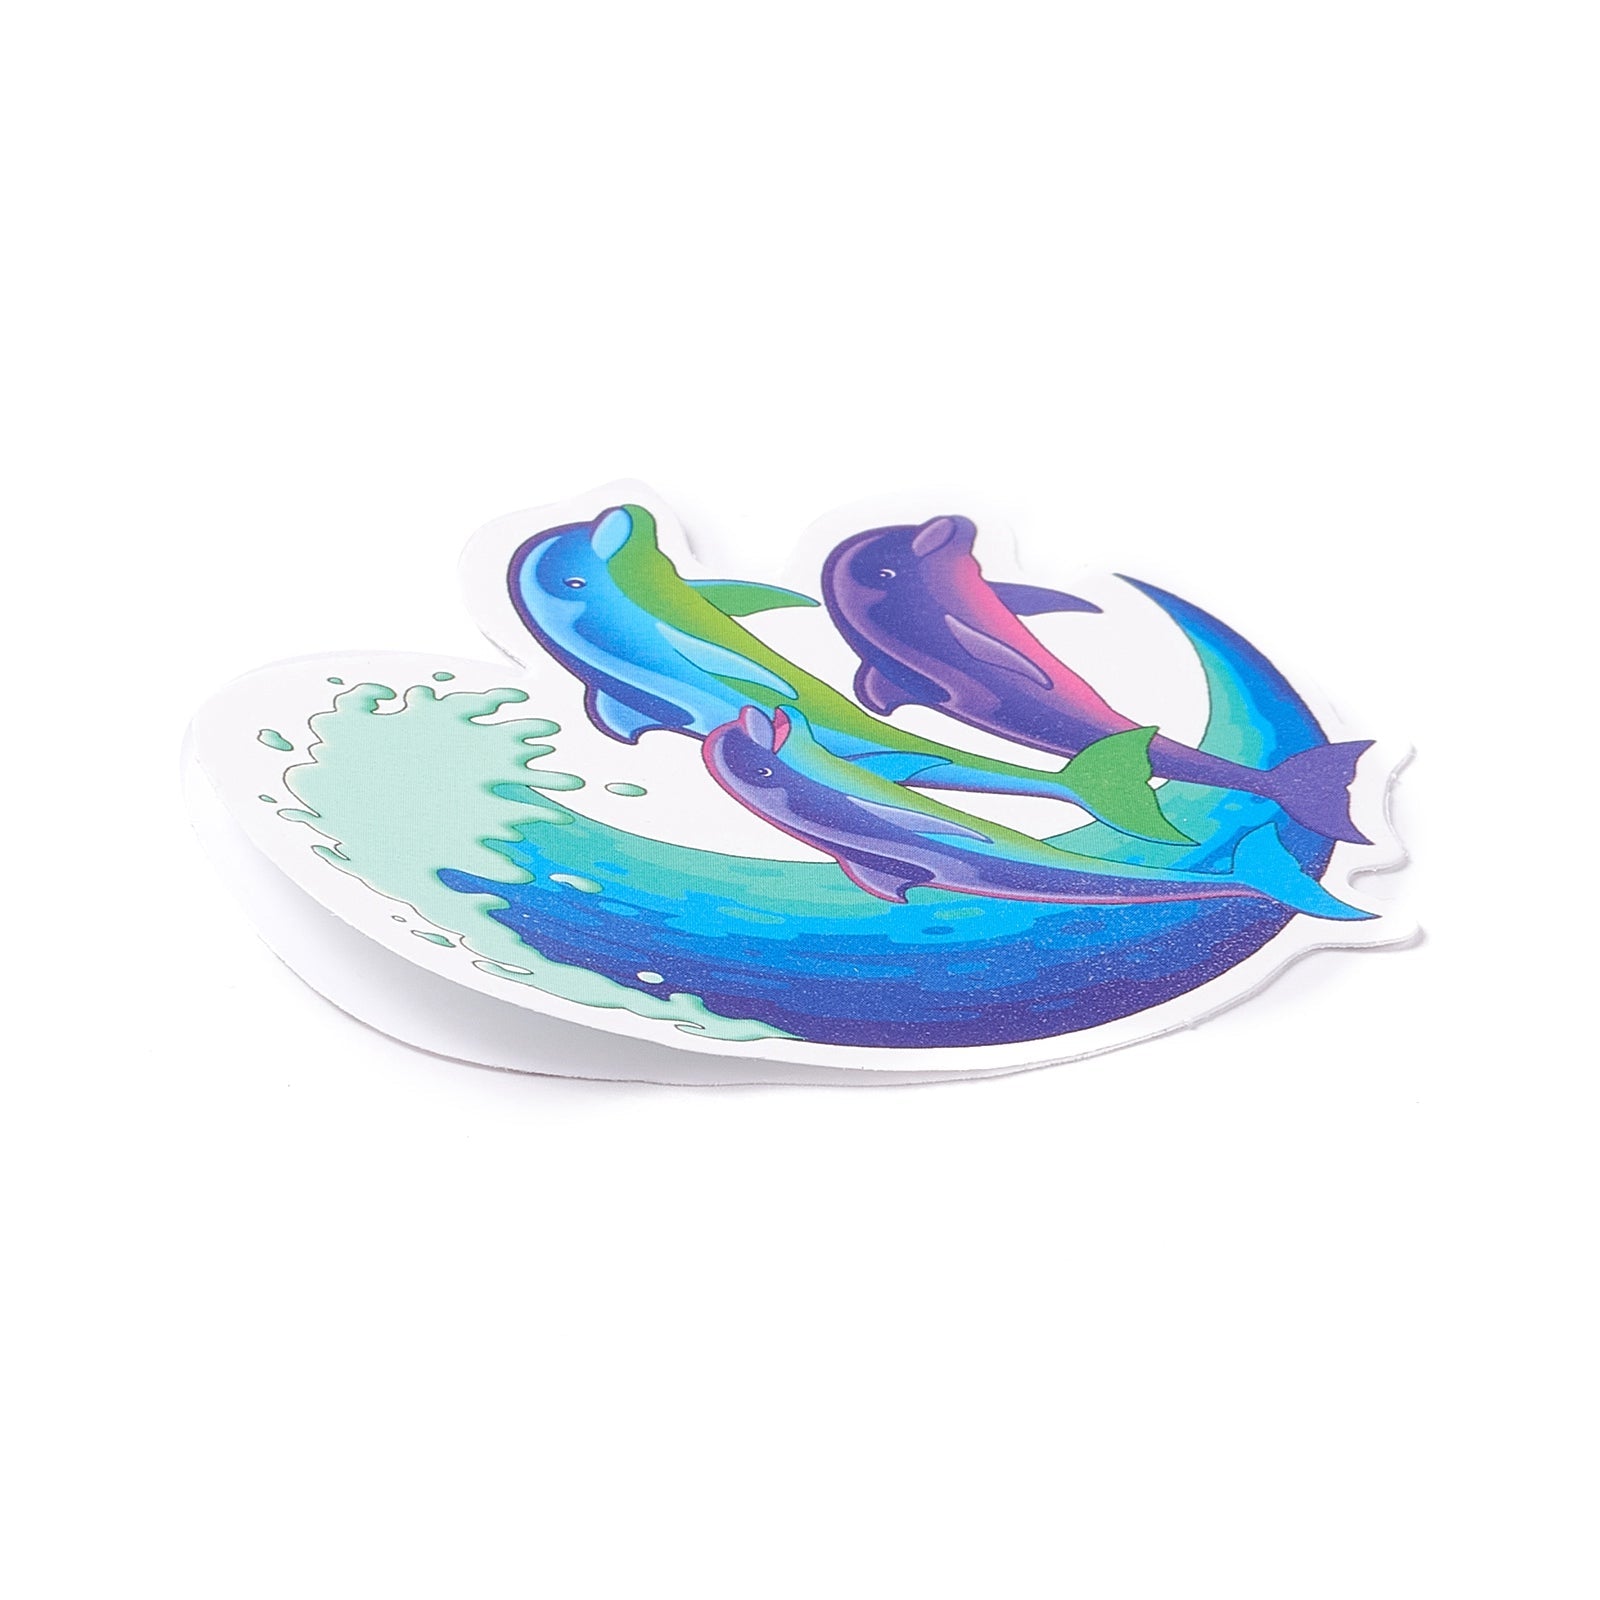 Craspire Coloful Cartoon Stickers, Vinyl Waterproof Decals, for Water Bottles Laptop Phone Skateboard Decoration, Ocean Themed Pattern, 5.1x3.7x0.02cm, 49pcs/bag